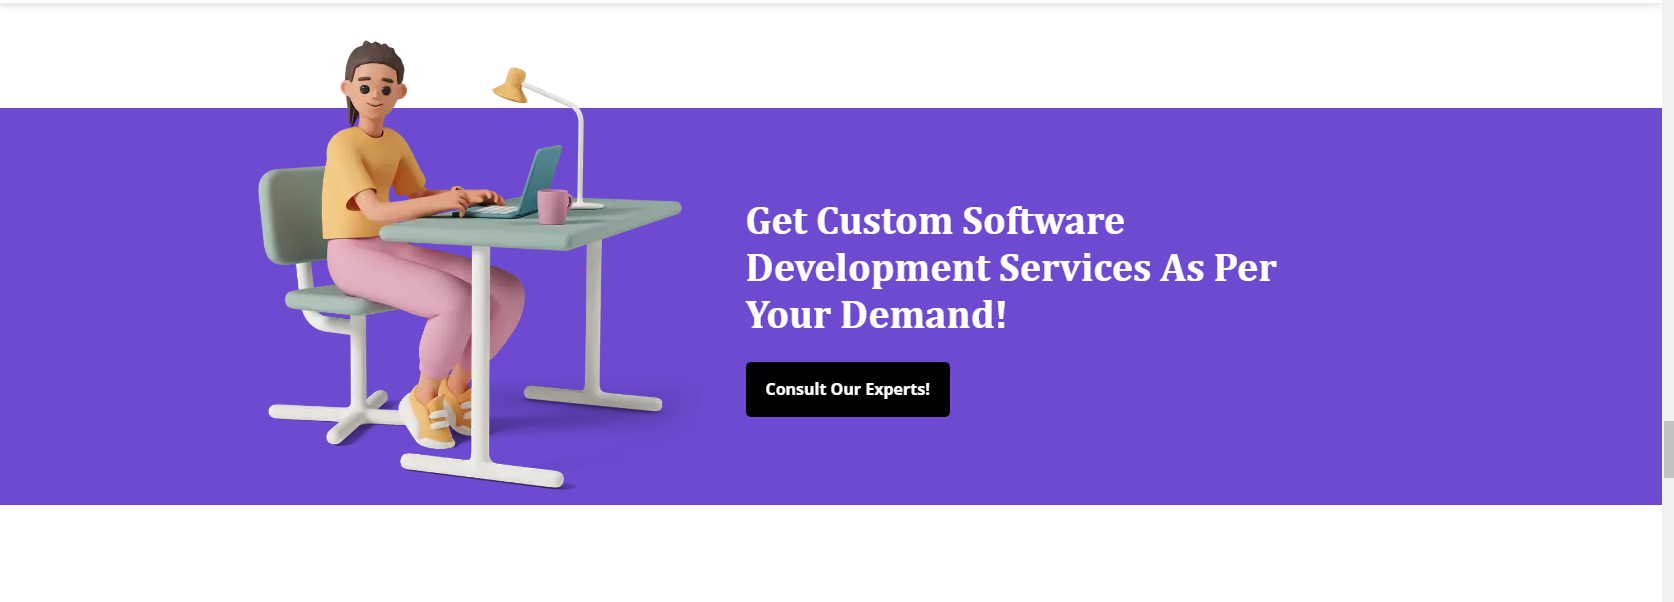 Get Custom Software